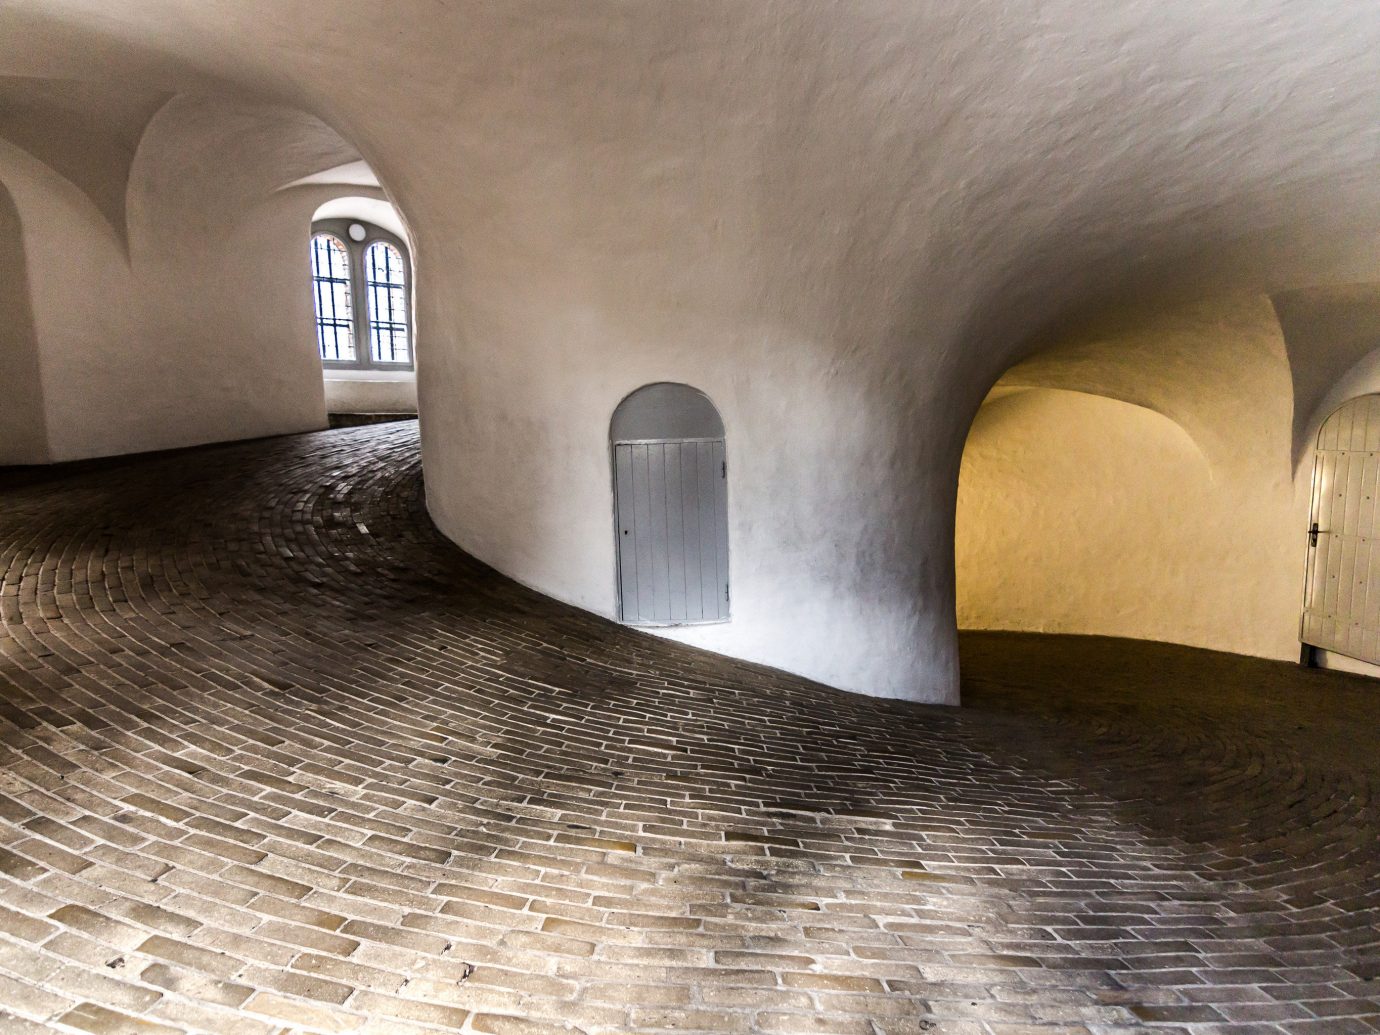 Copenhagen Denmark Trip Ideas indoor arch Architecture wall floor tourist attraction daylighting concrete flooring angle